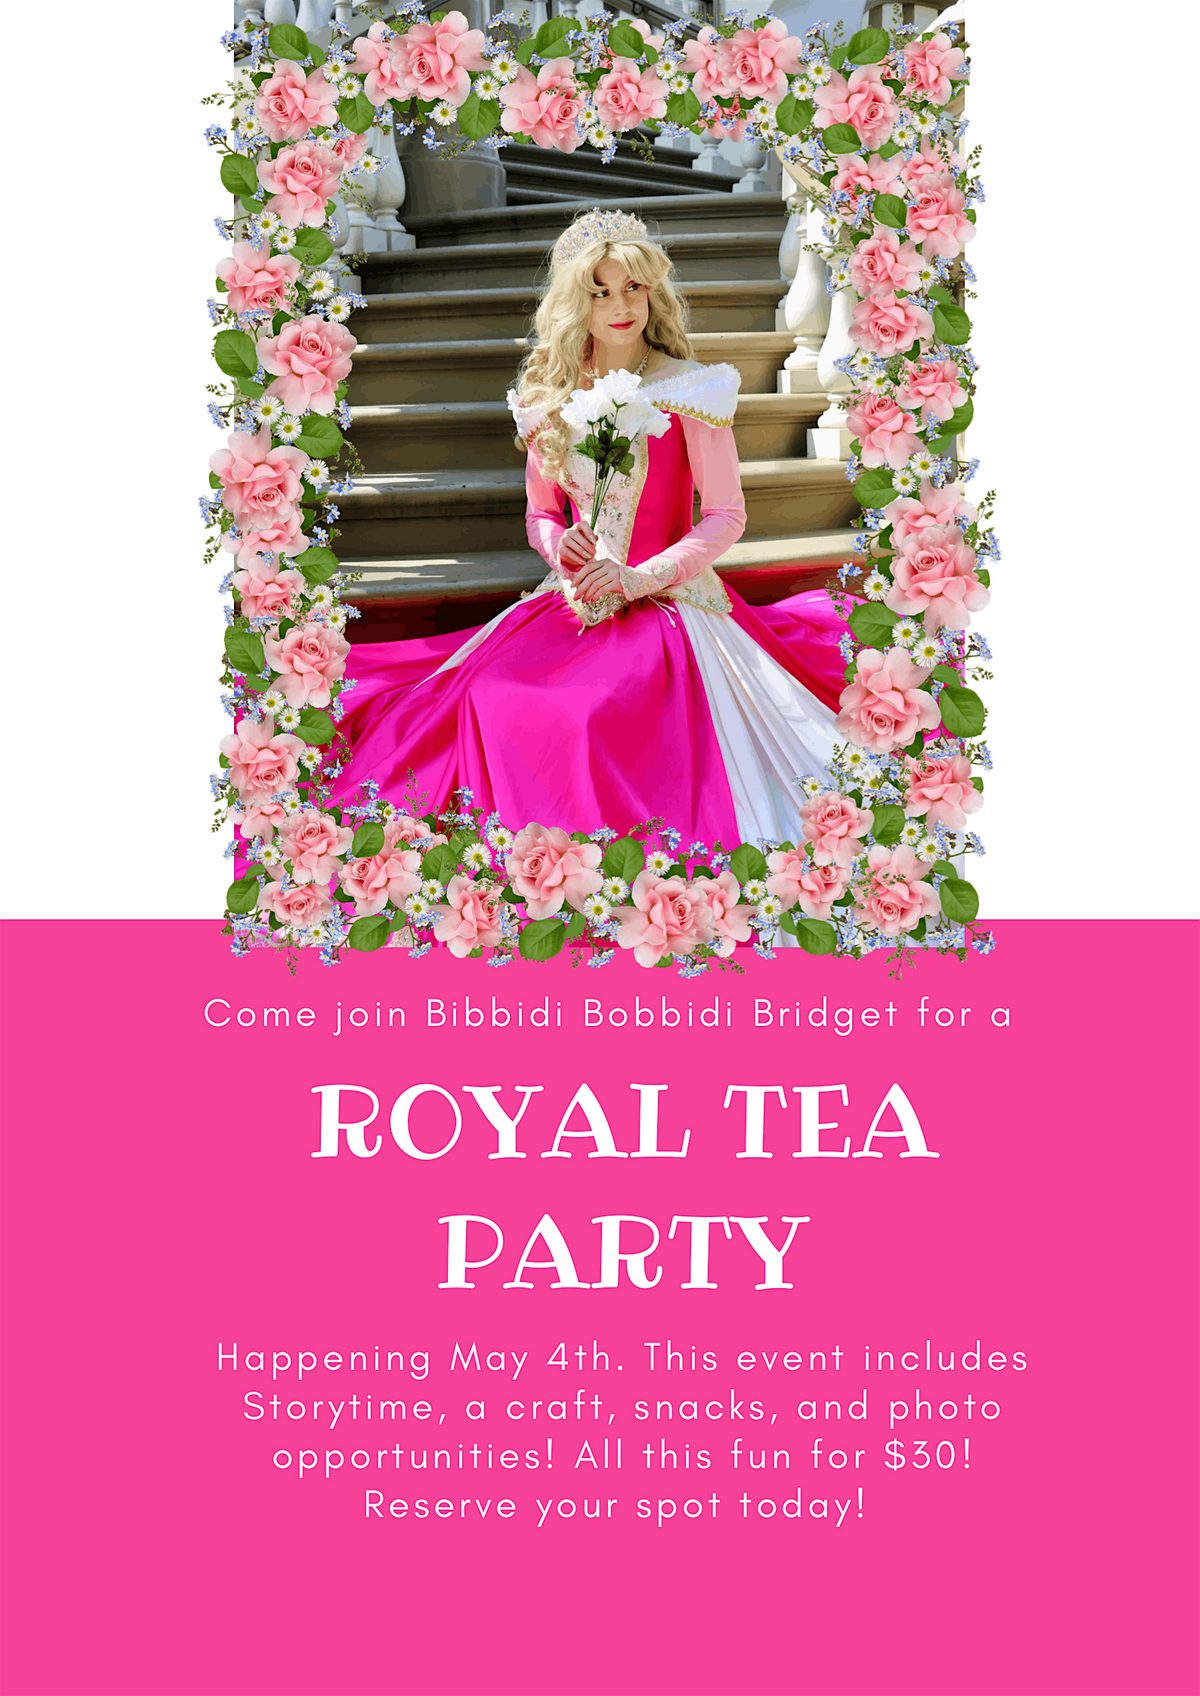 A Royal Tea Party